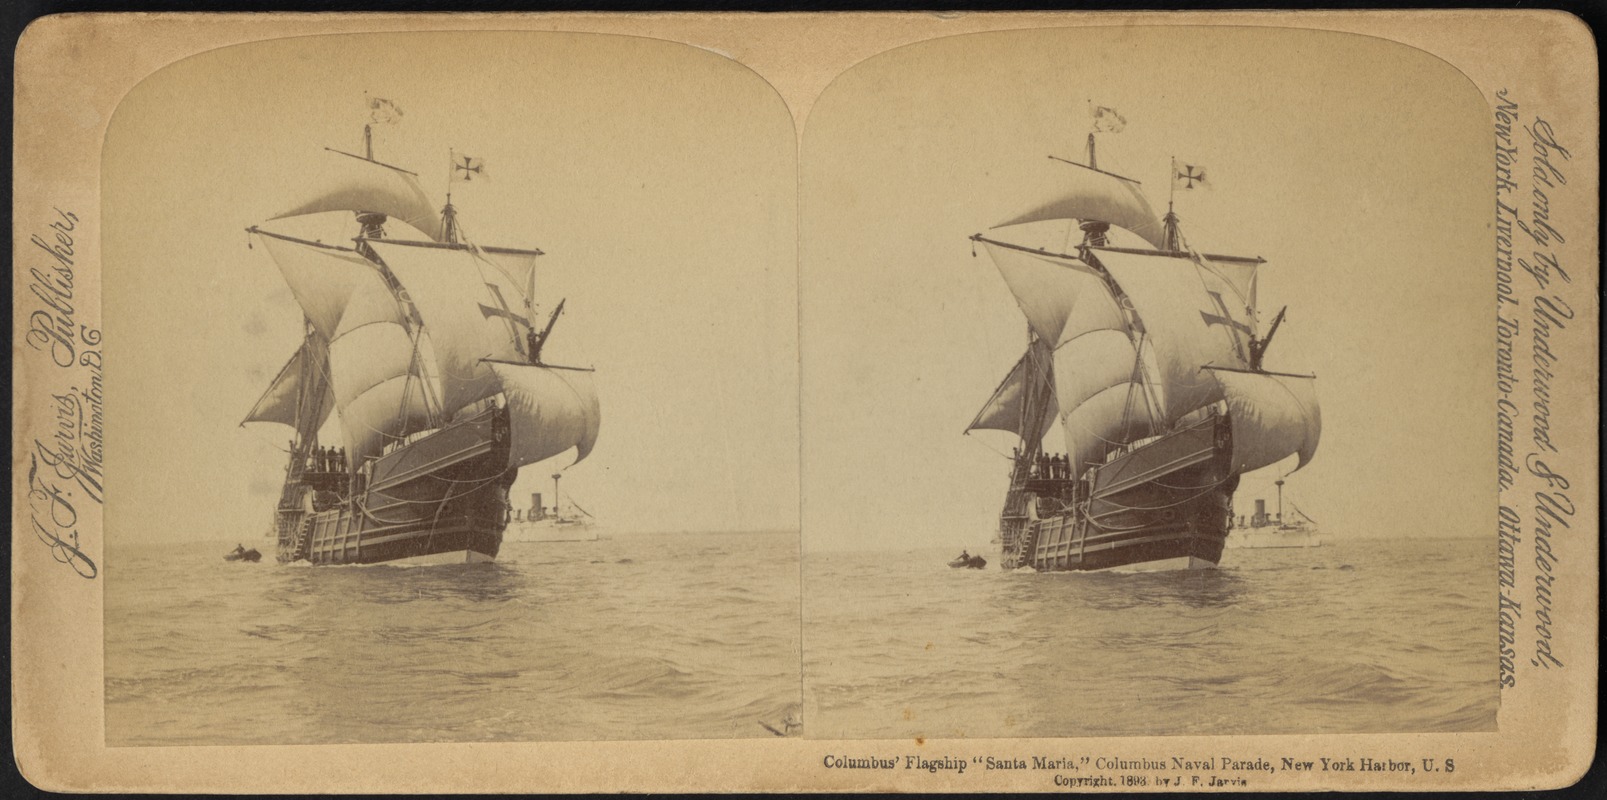 Columbus' flagship "Santa Maria," Columbus naval parade, New York Harbor, U.S.A.